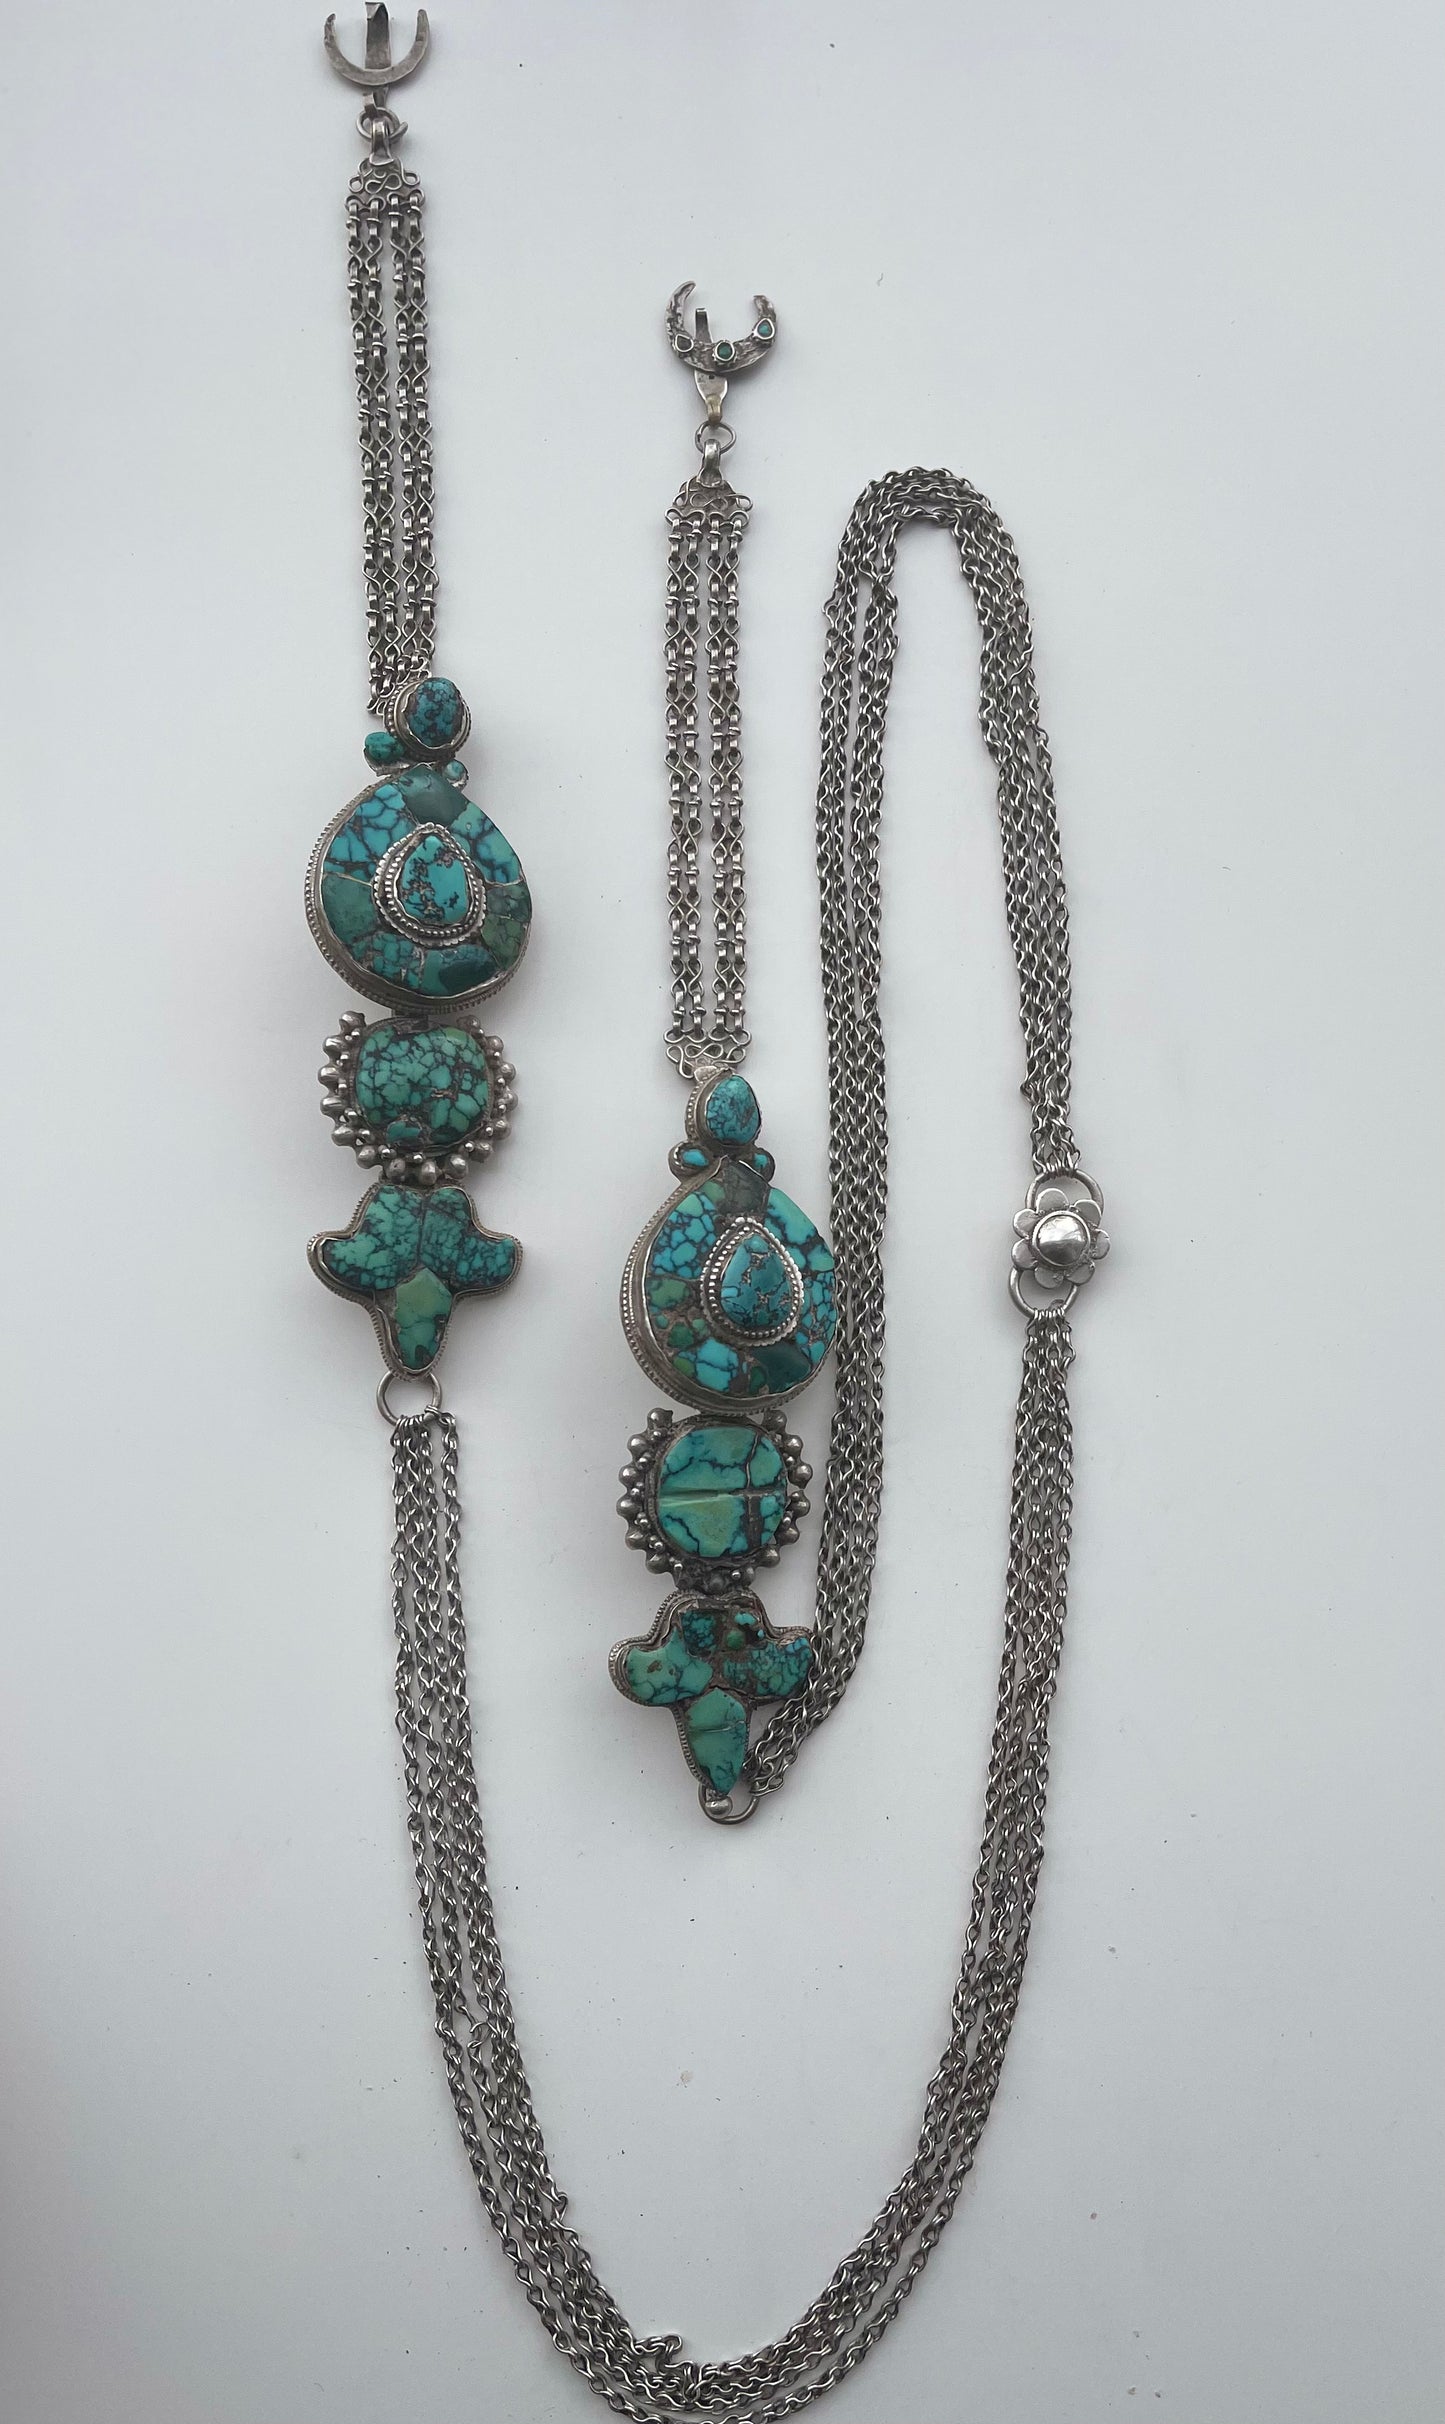 A pair of antique Tibetan earrings -aykhor